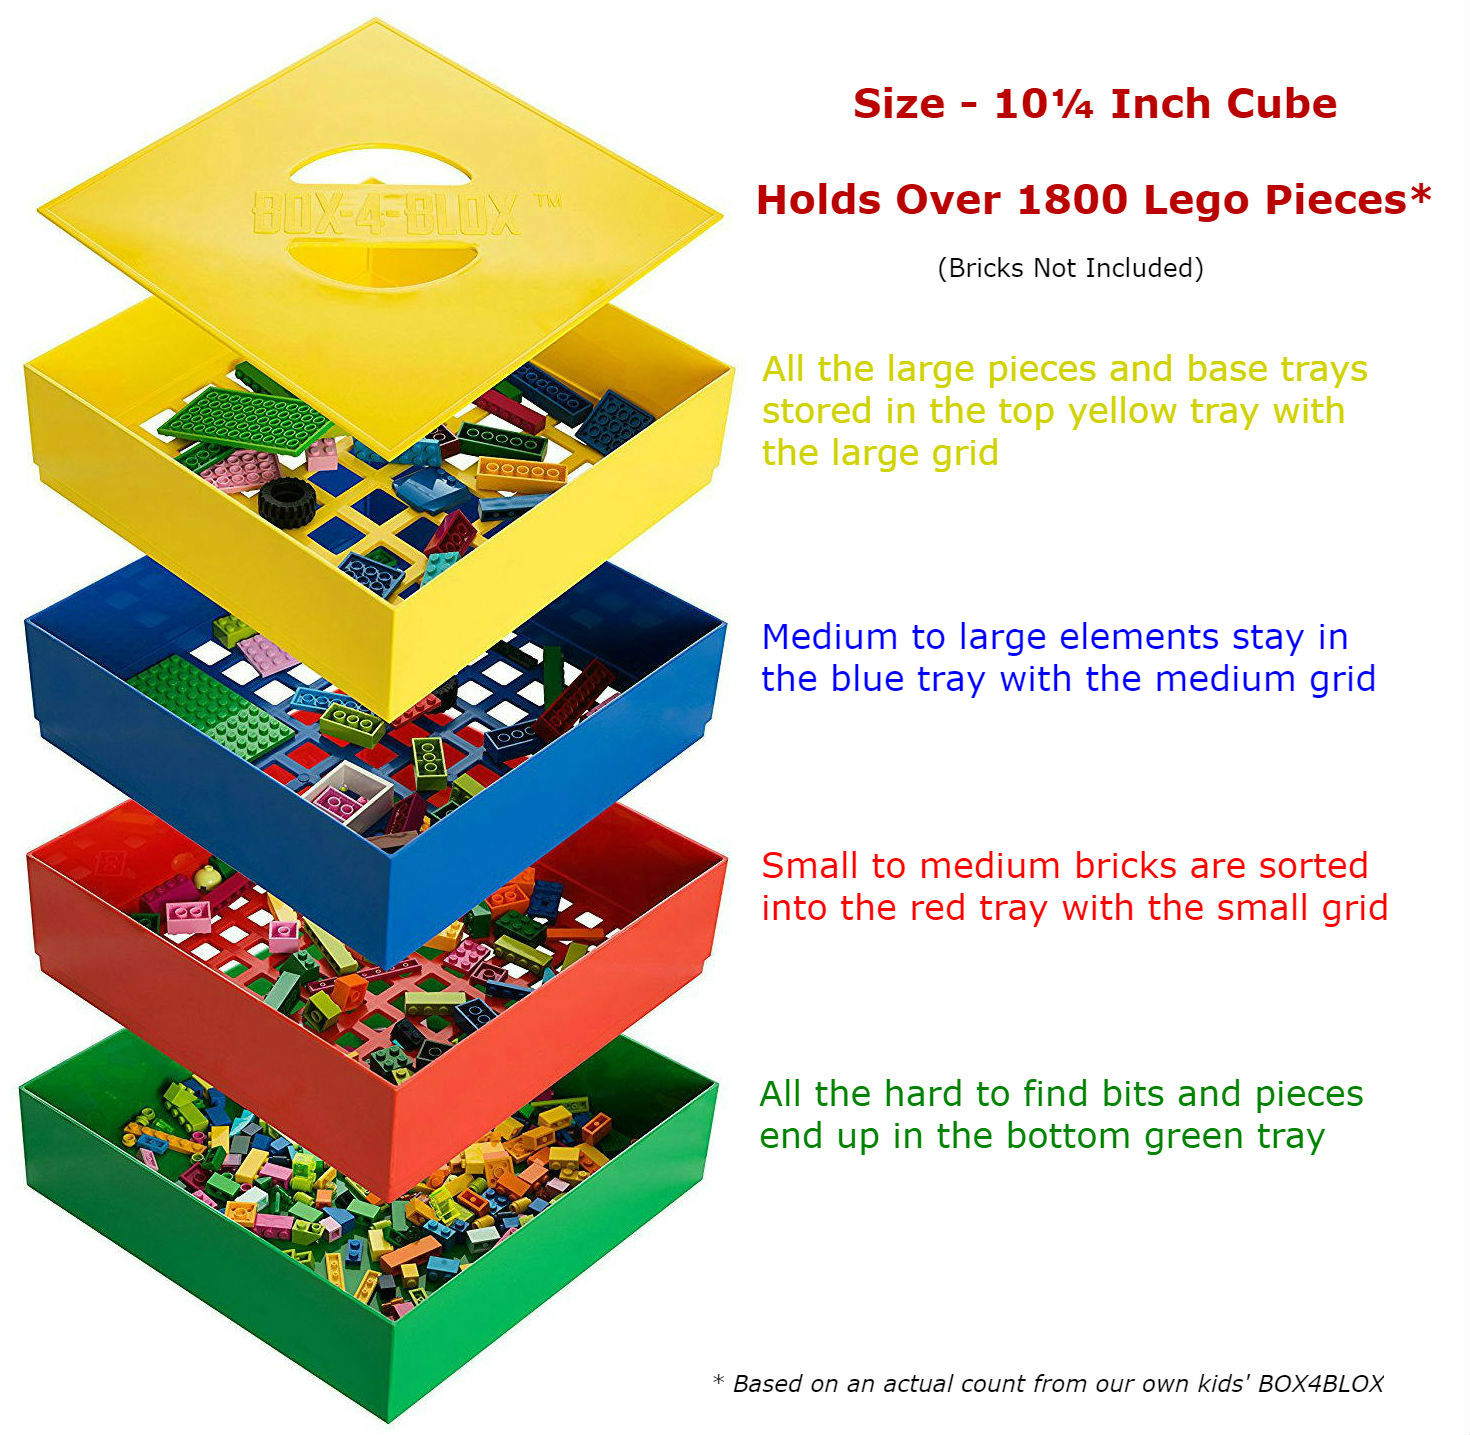 Cross section of BOX4BLOX Lego toy storage idea